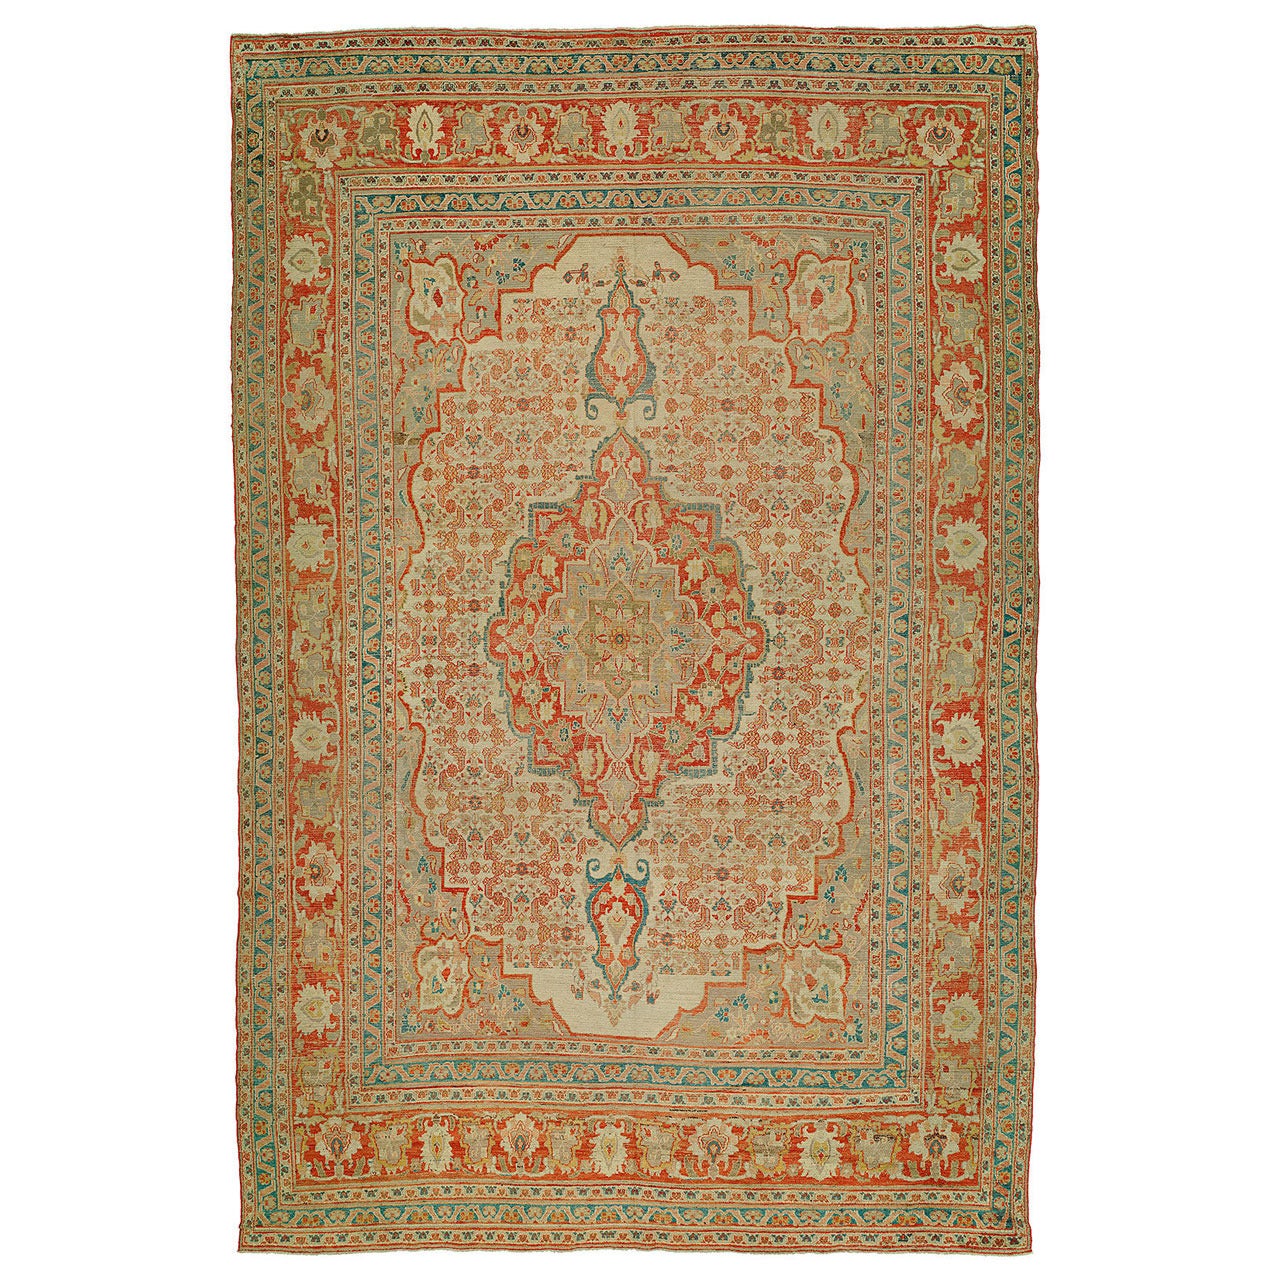 Antiker persischer Doroksh-Teppich aus der Zabihi-Kollektion